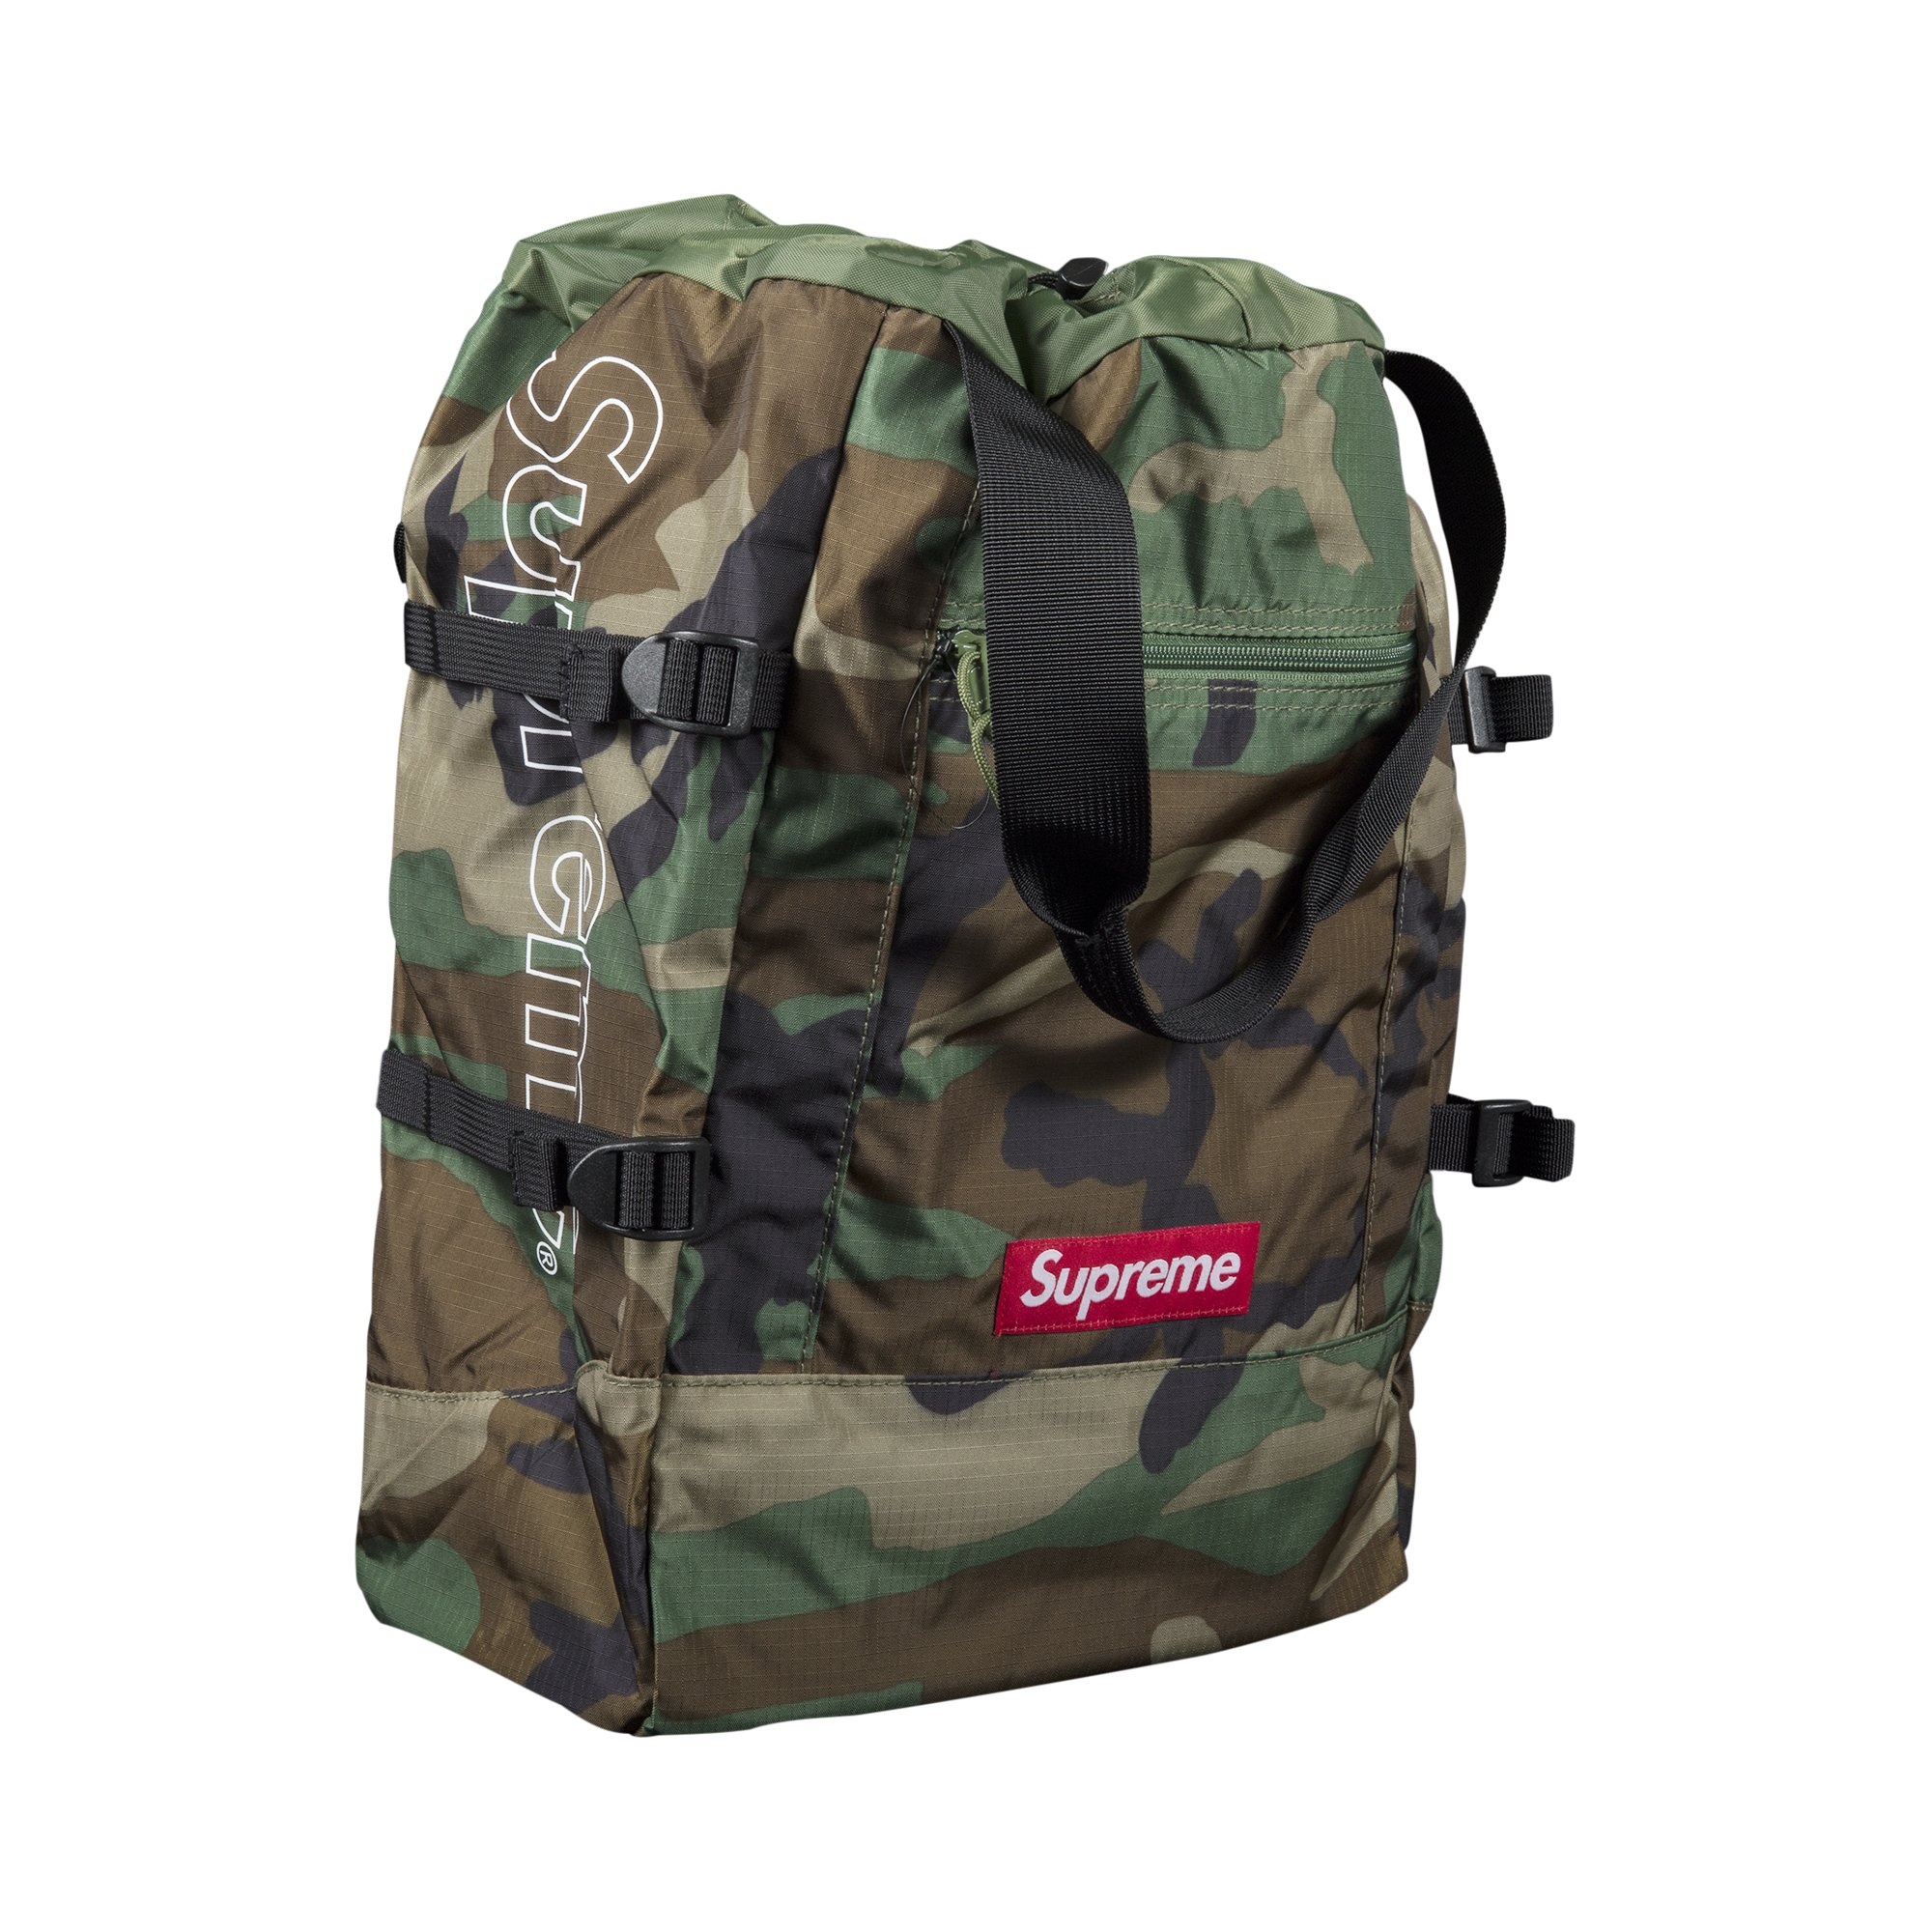 Supreme Tote Backpack 'Camo'